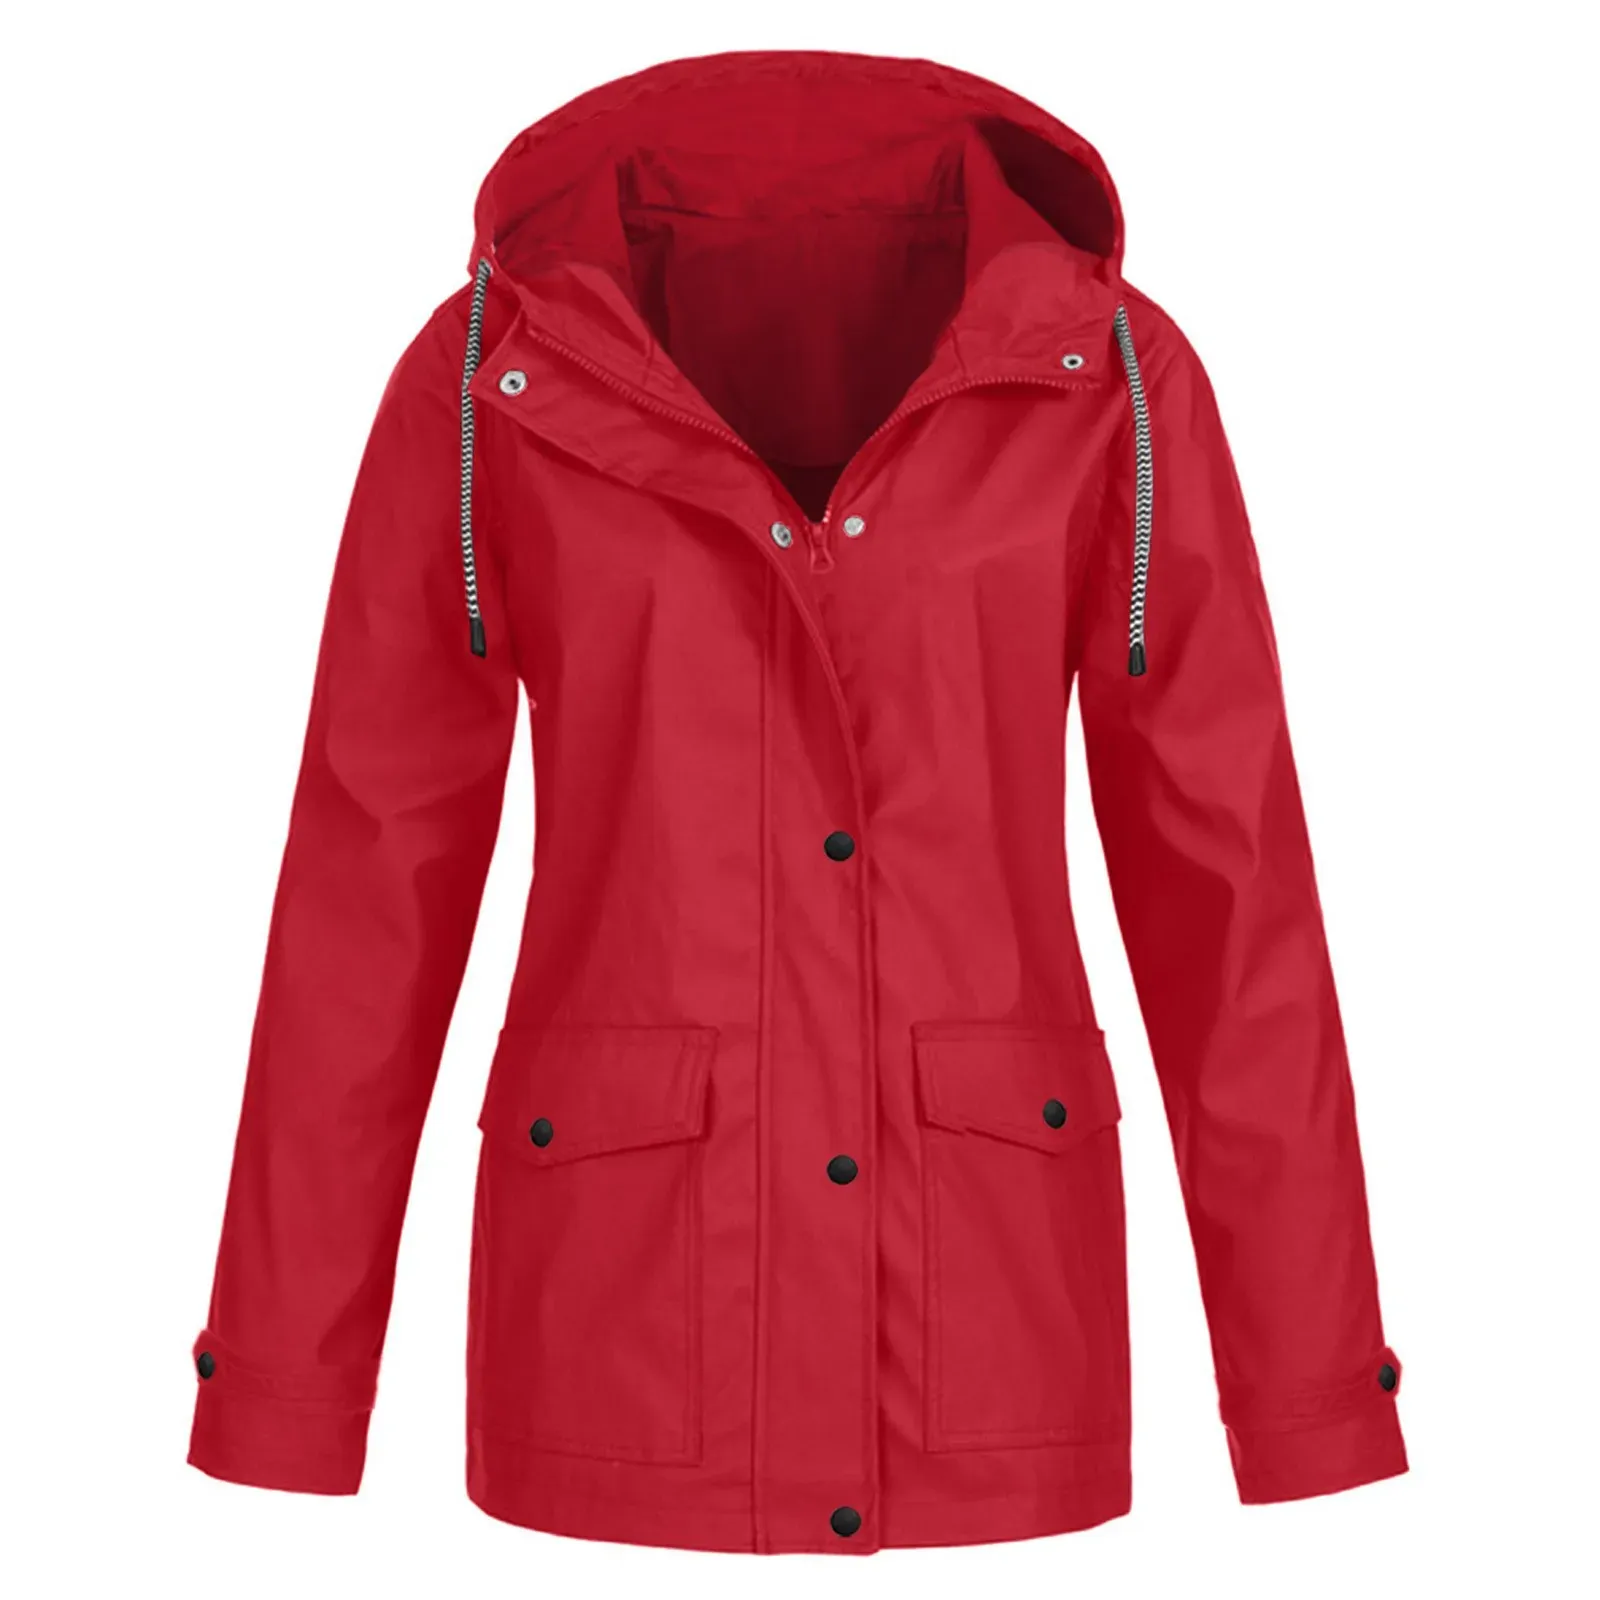 Jackets Women Solid Rain Jacket Outdoor Plus Size Waterproof Hooded Raincoat Windproof New Warm Jacket Windproof Outdoor